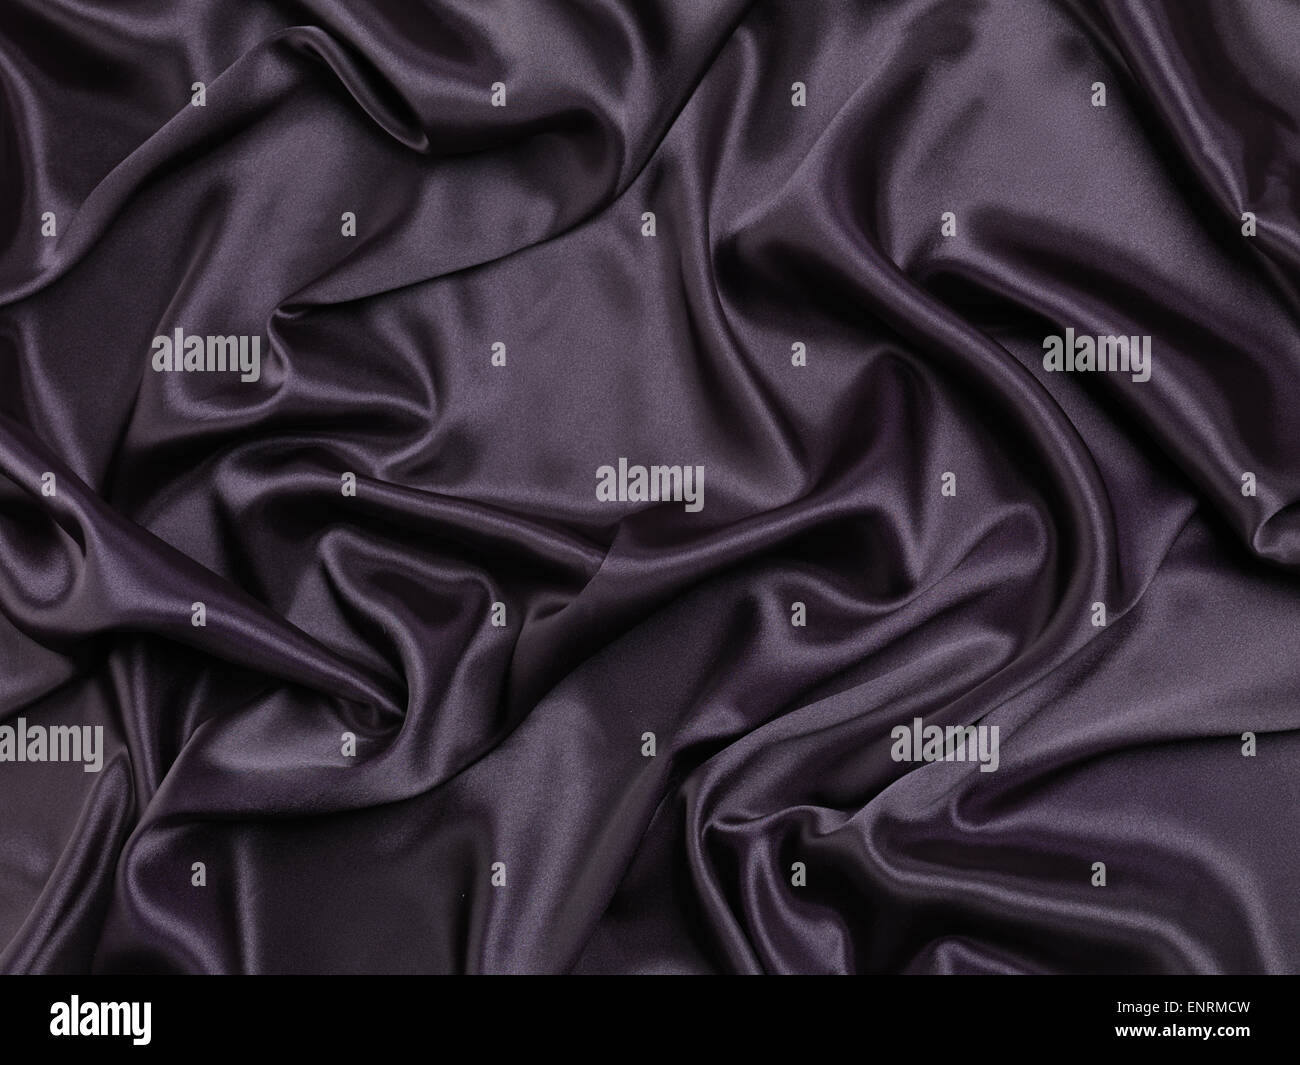 Black shiny silky fabric abstract background texture Stock Photo